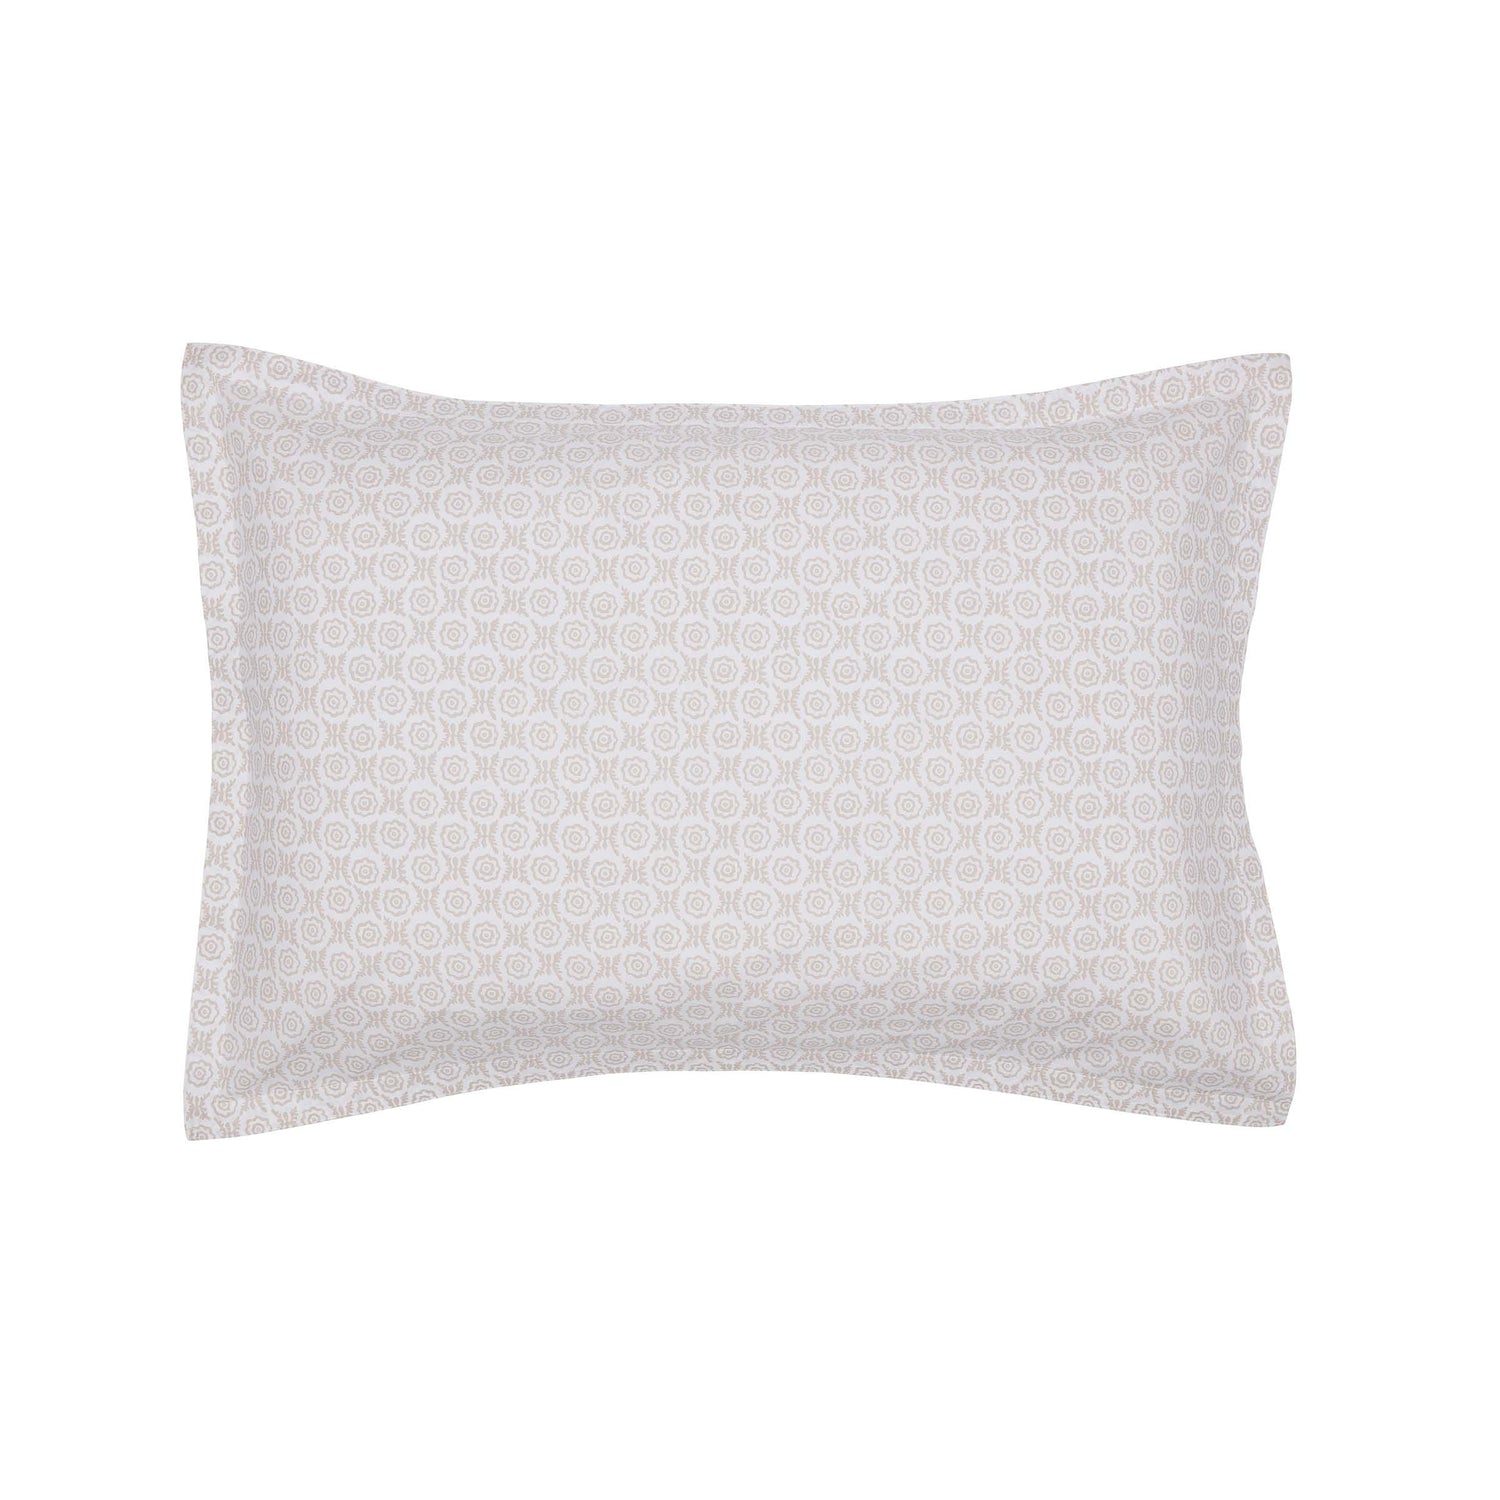 Floral Pattern Pillowcase in Linen